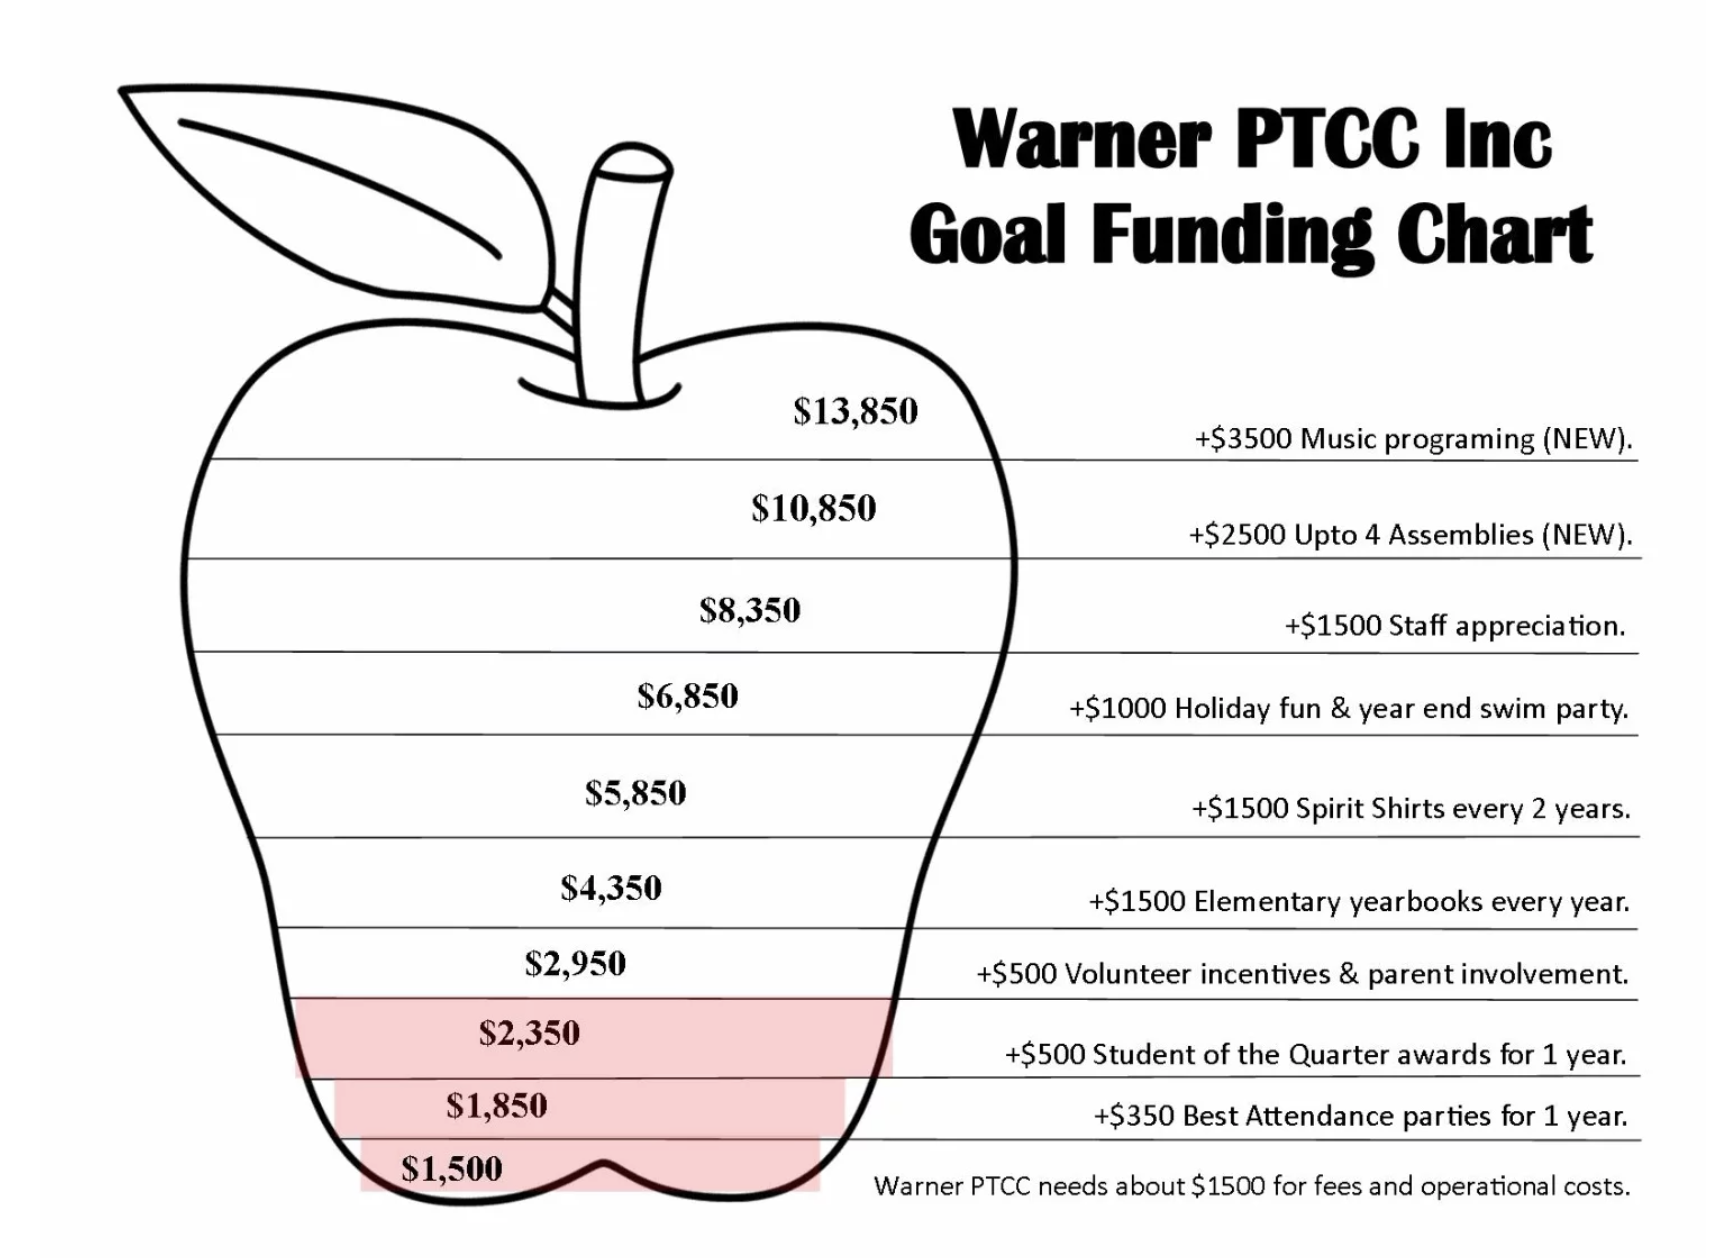 Warner PTCC Inc Goal Funding Chart